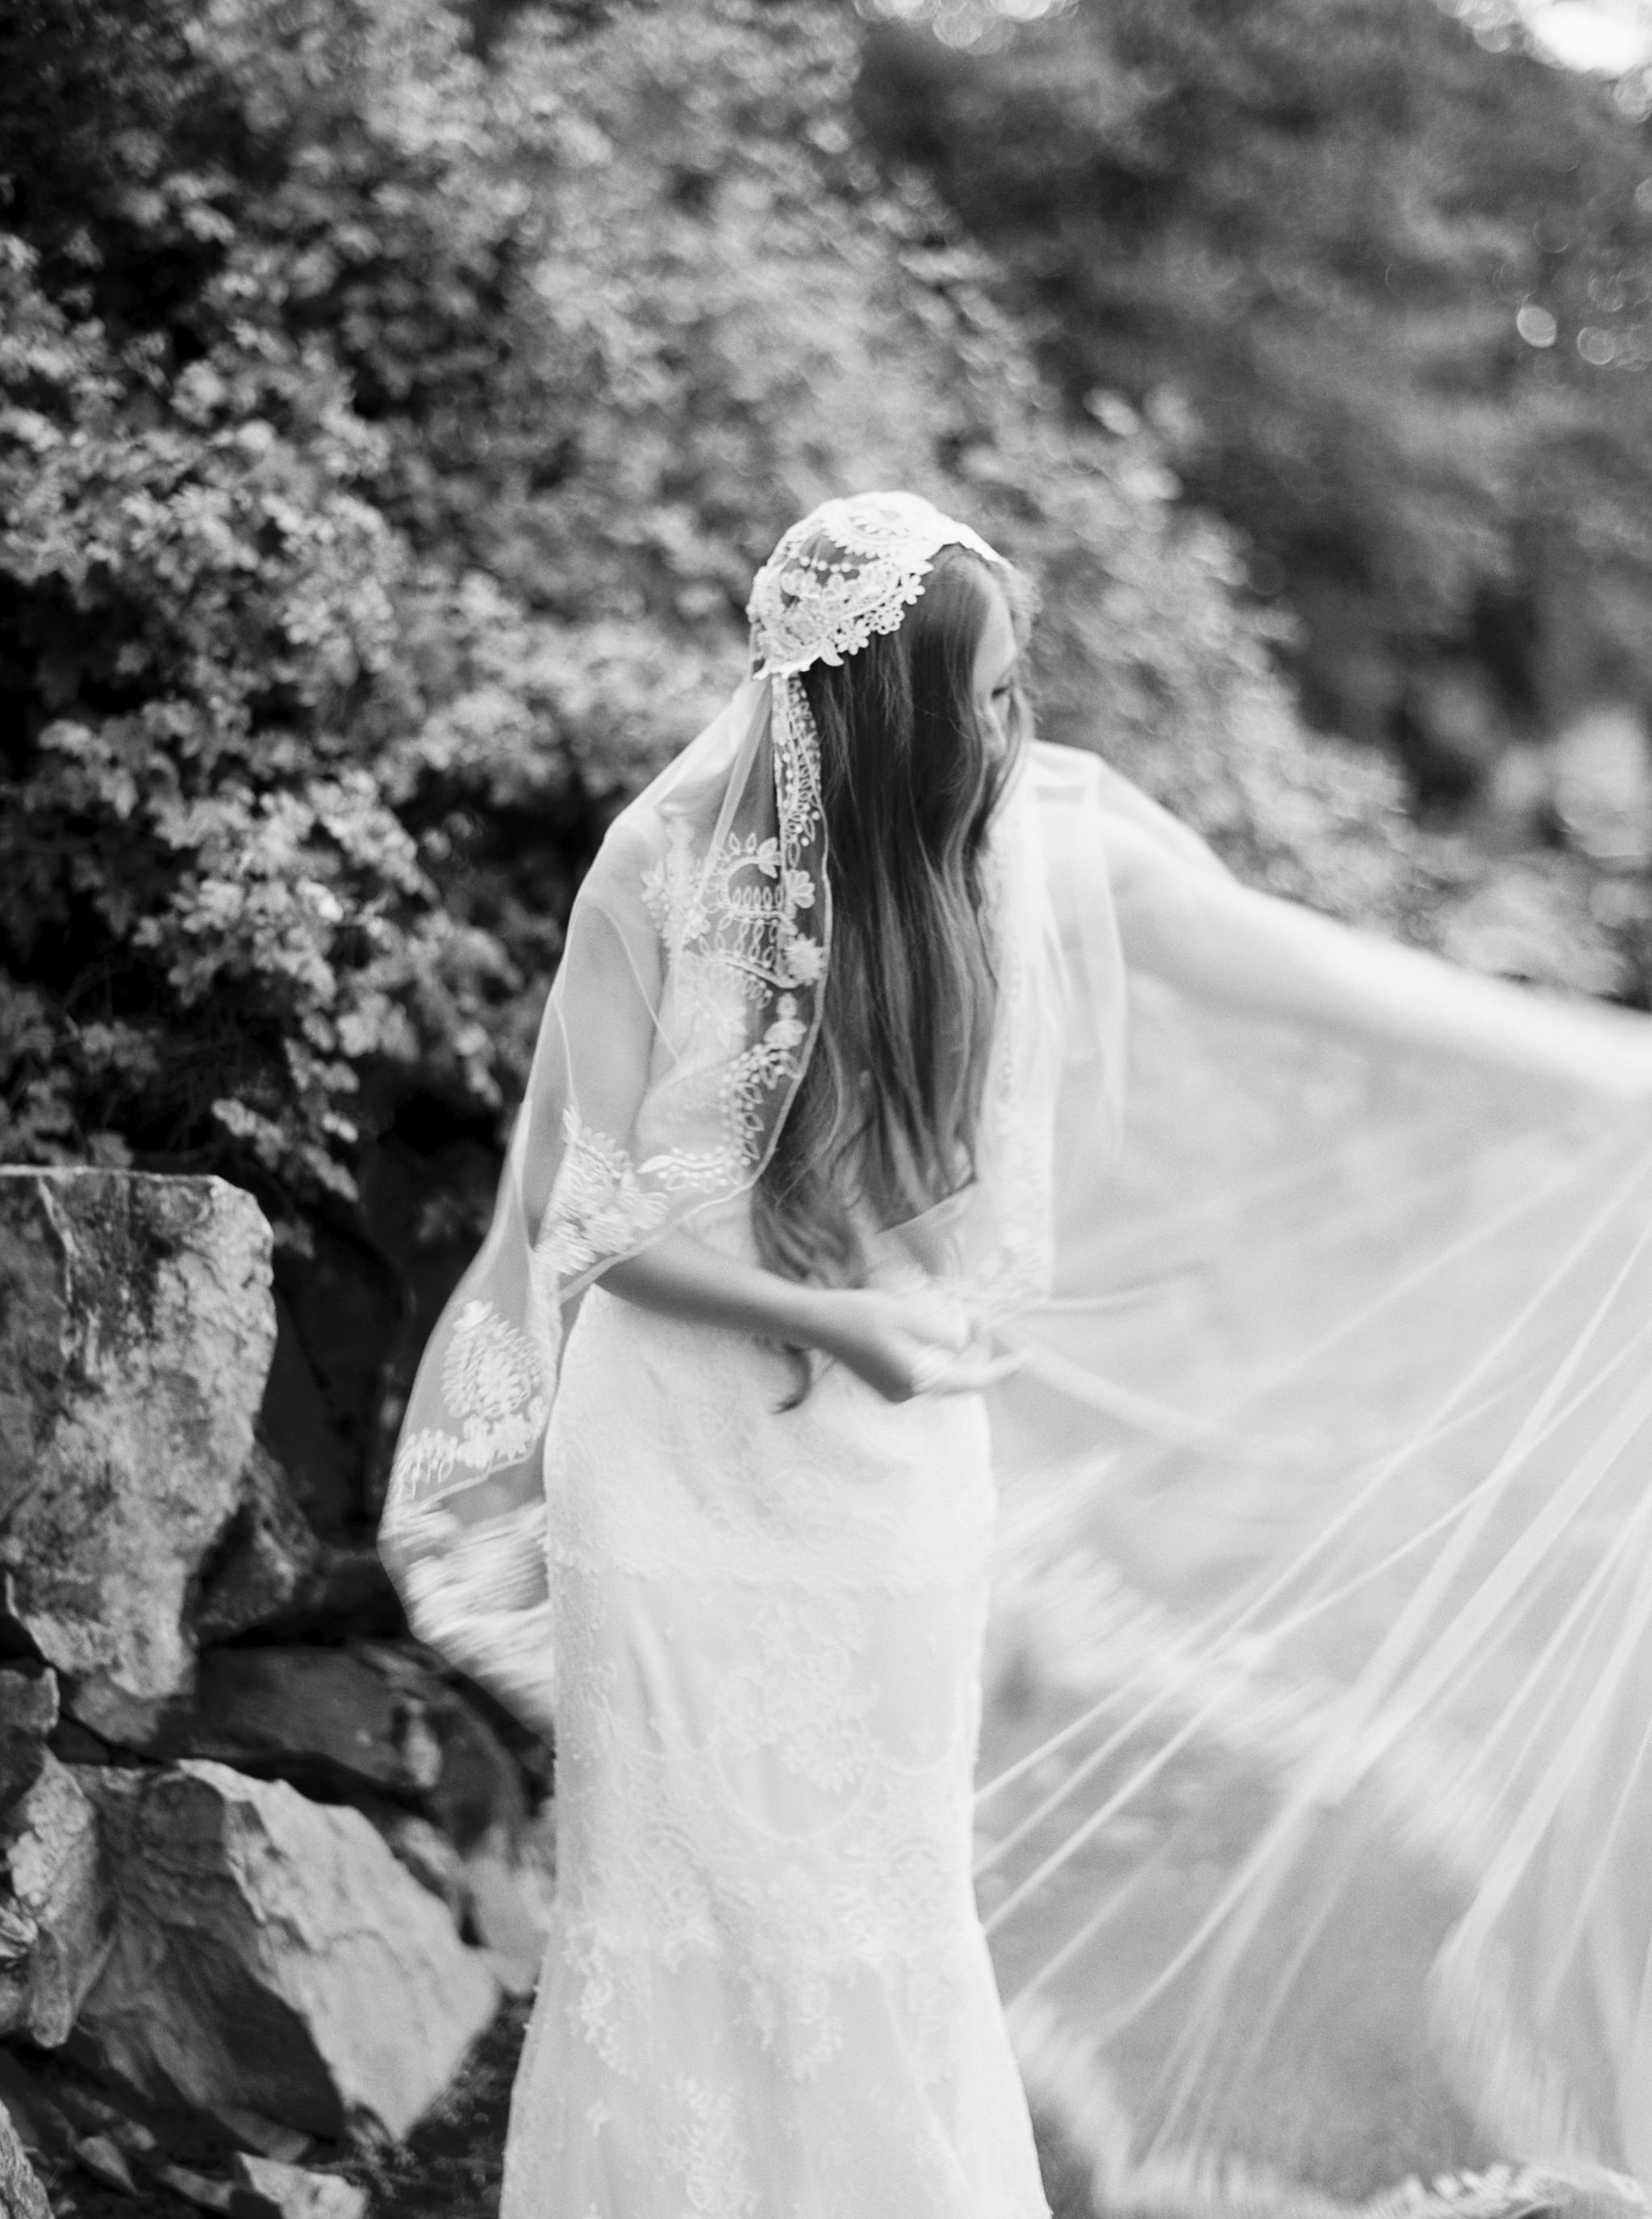  Scotland inspired bridal shoot on film

Jeremiah & Rachel Photography

www.jeremiahandrachel.com

Featured on Oncewed

 